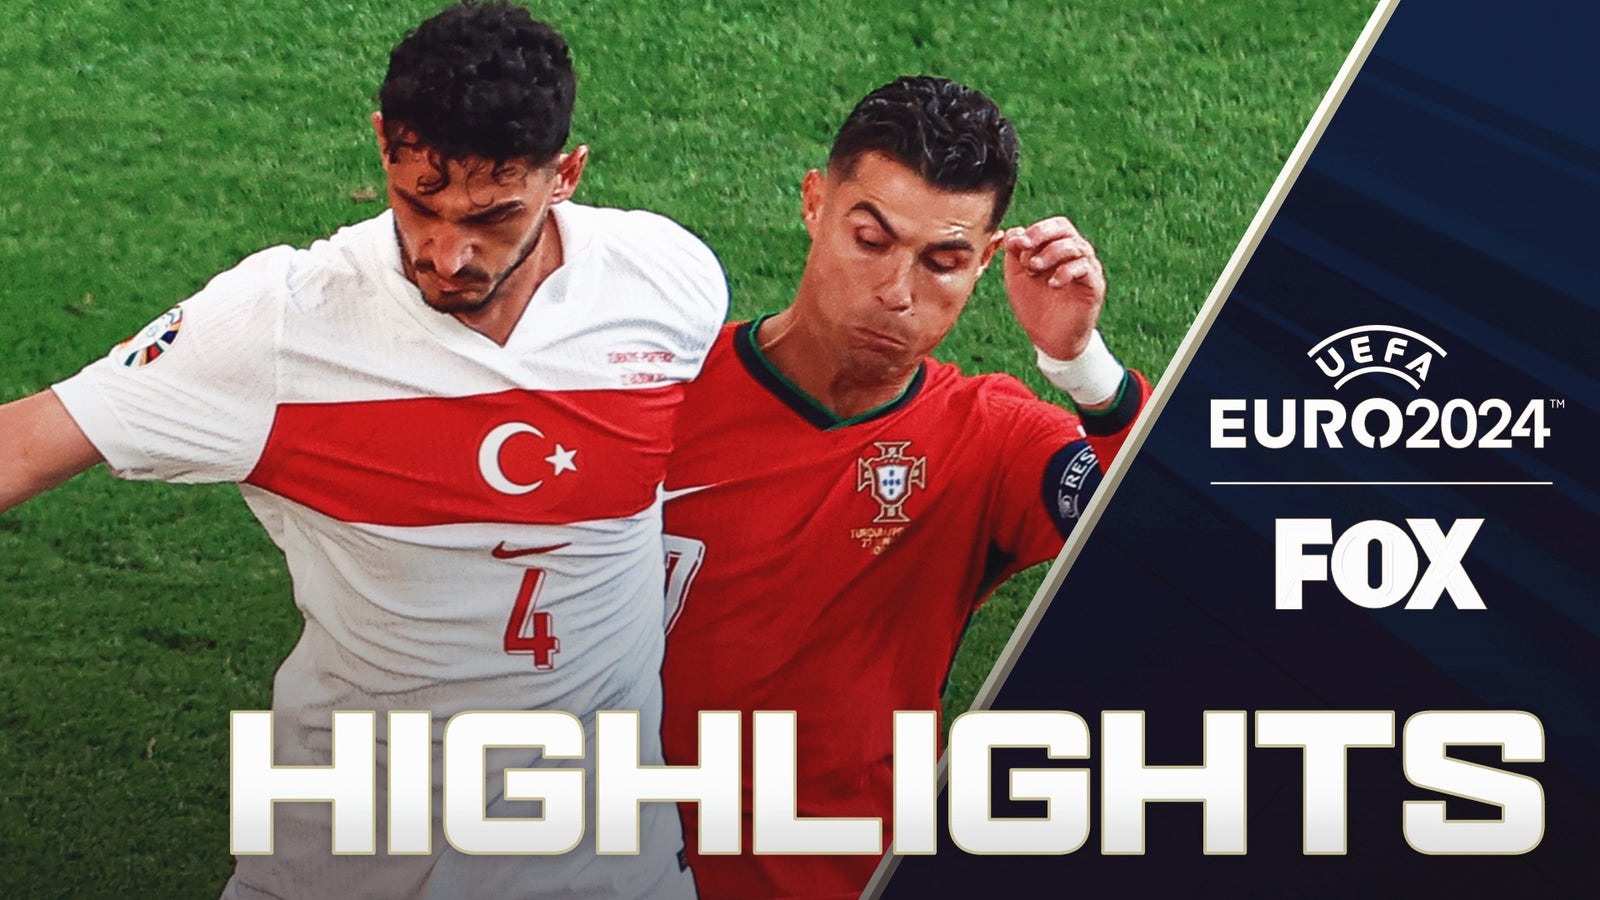 Türkiye vs. Portugal Highlights